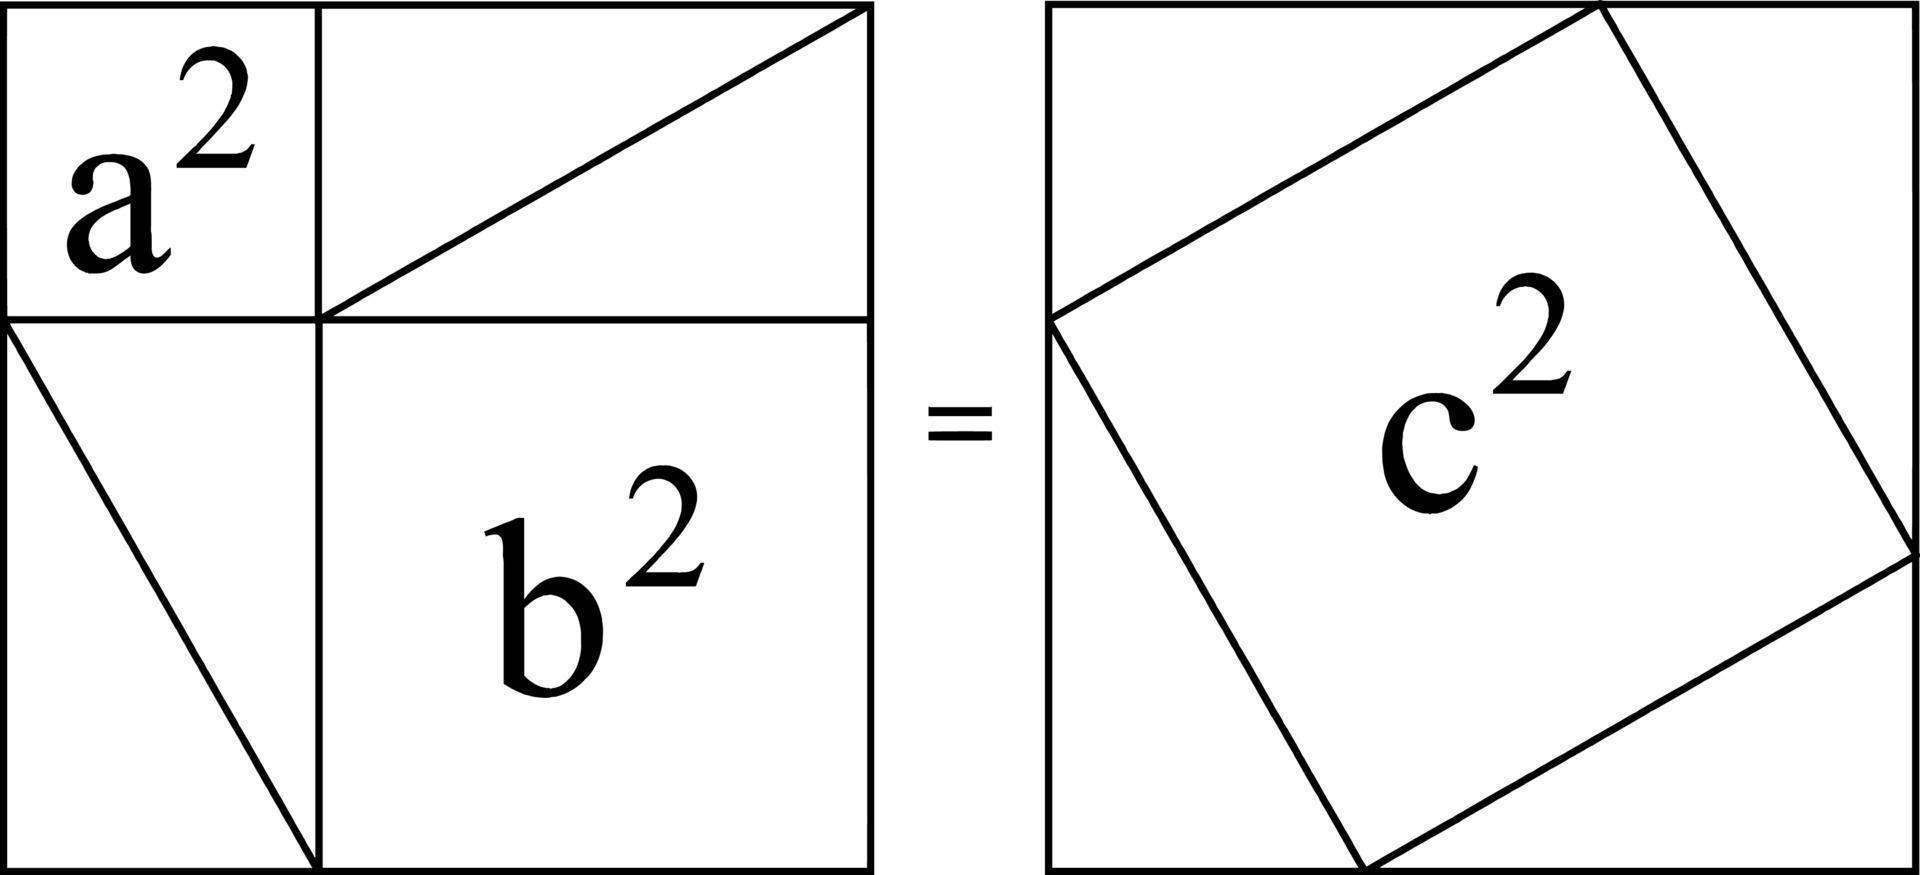 Pythagorean Theorem Proof by Rearrangement, vintage illustration vector